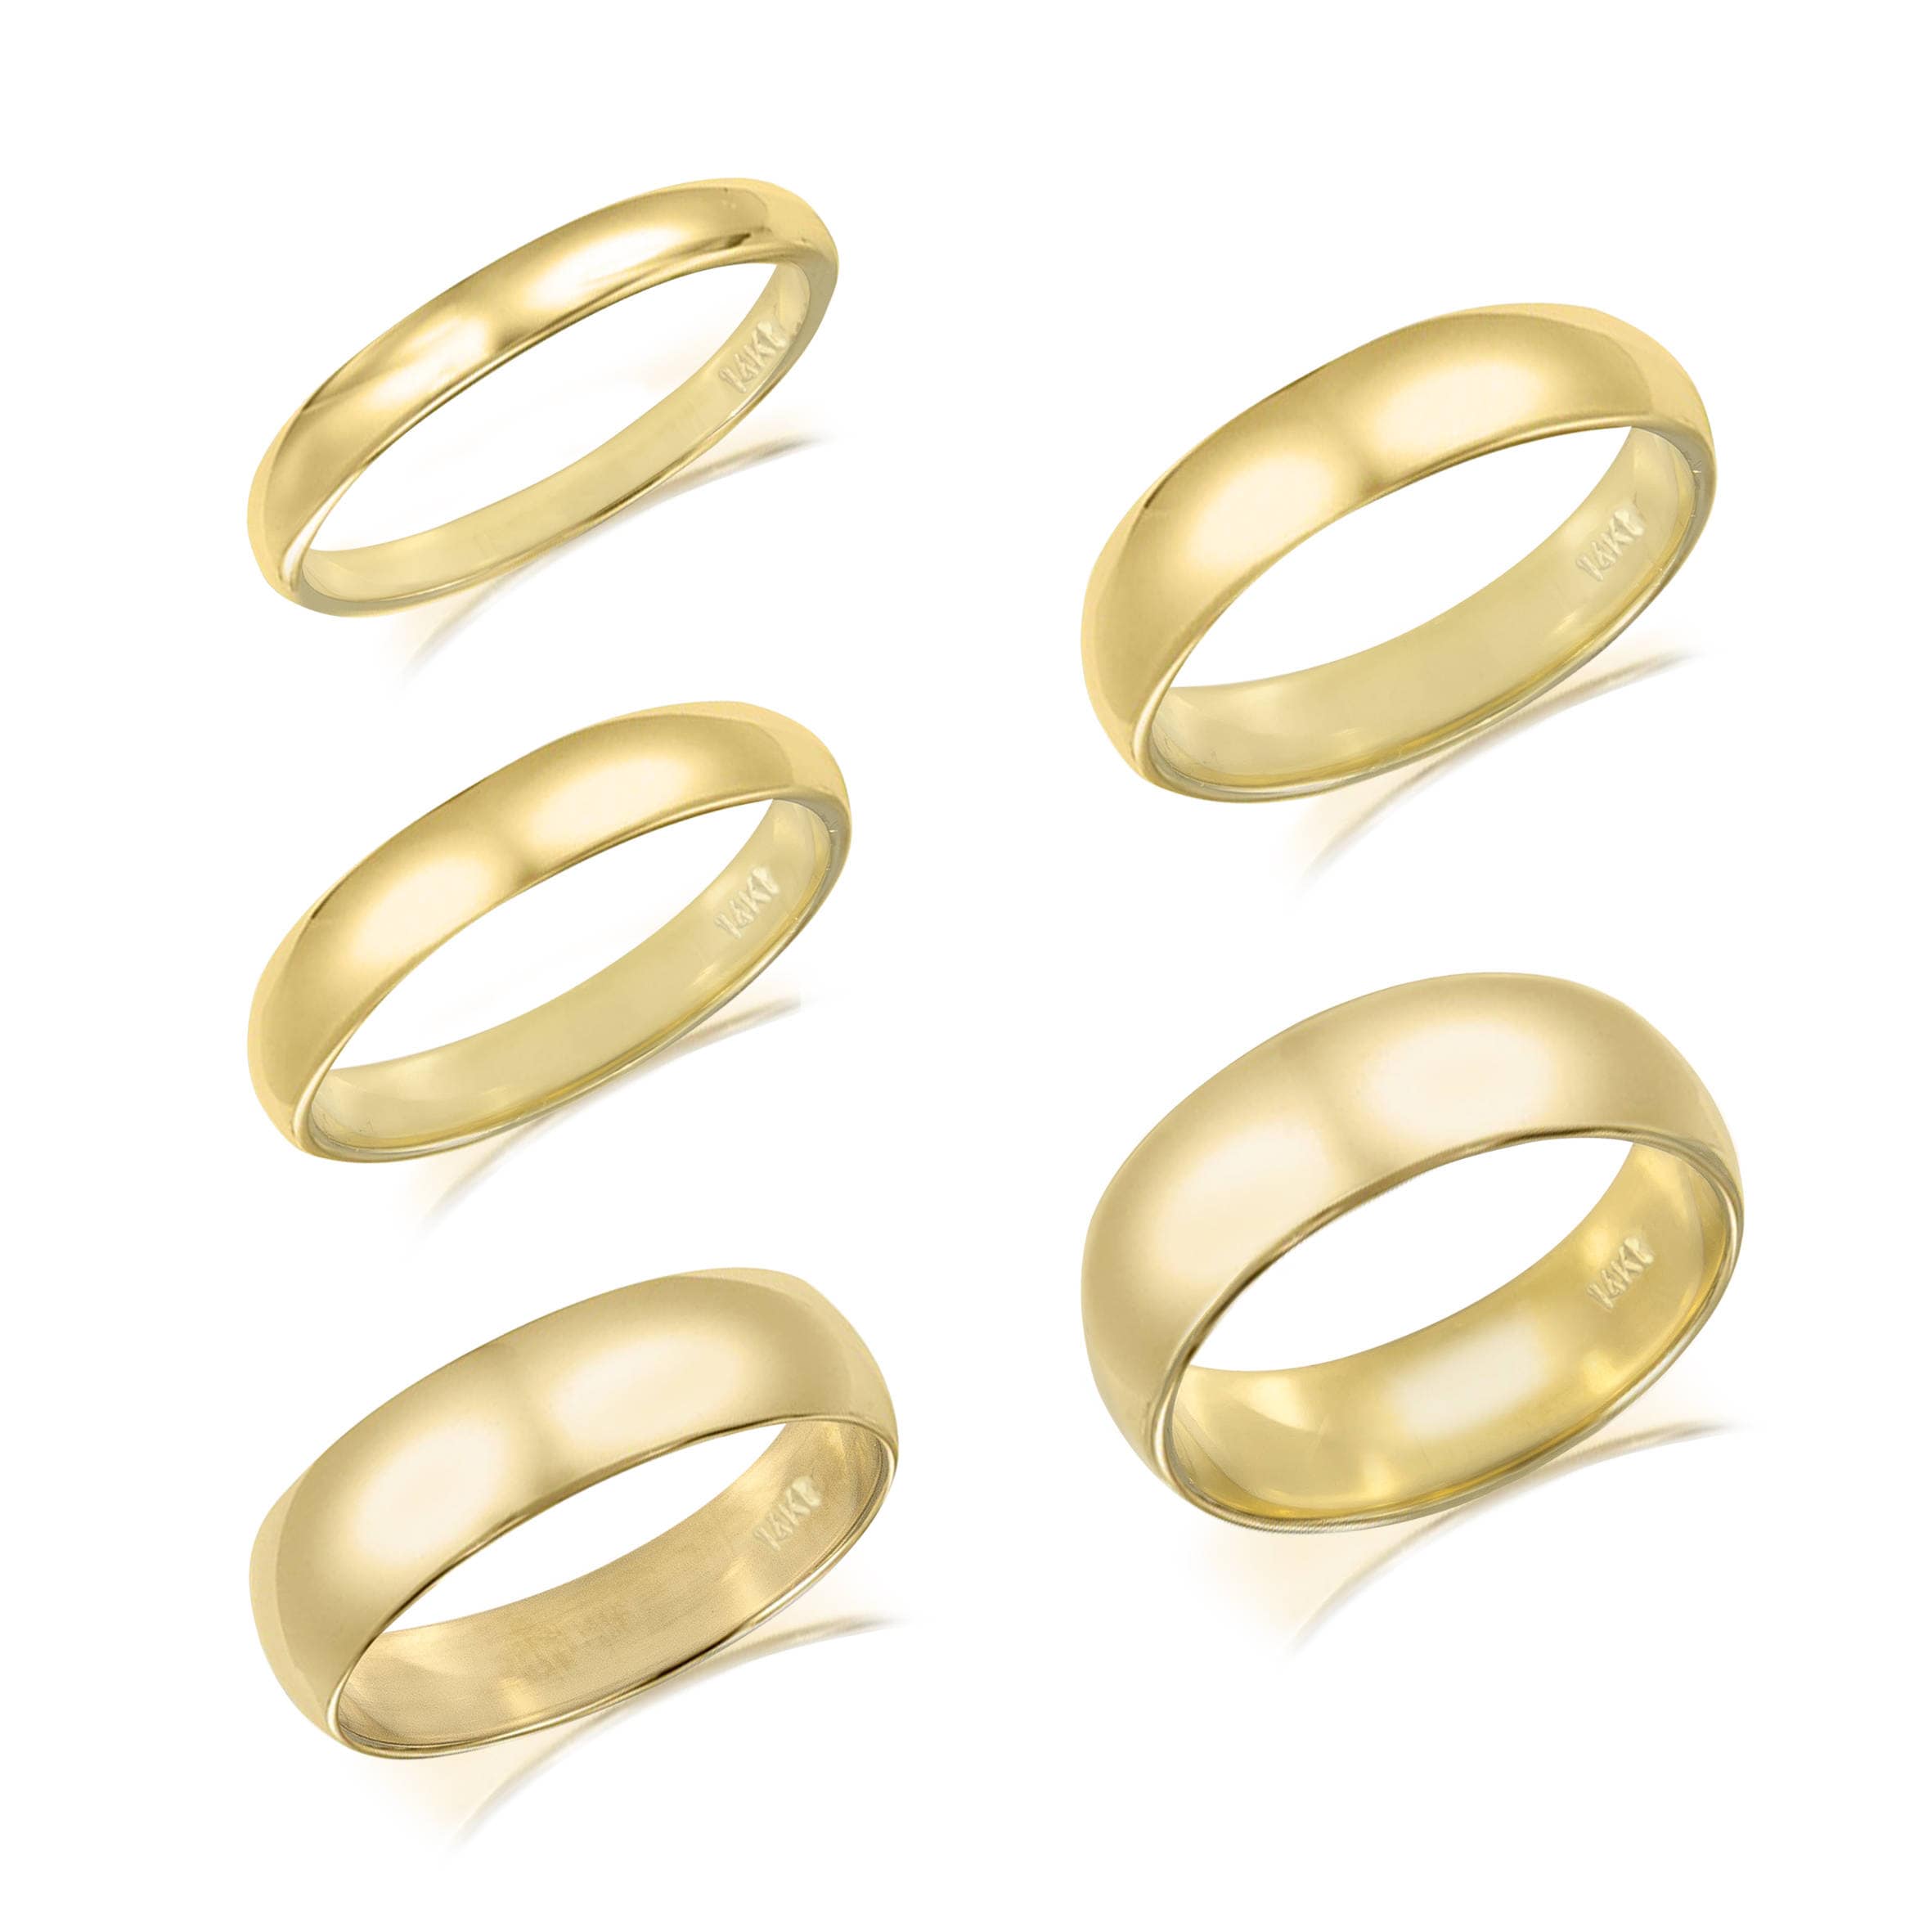 Guaranteed 14K Yellow Gold Plain Comfort Fit Wedding Band Ring Size 5-13 